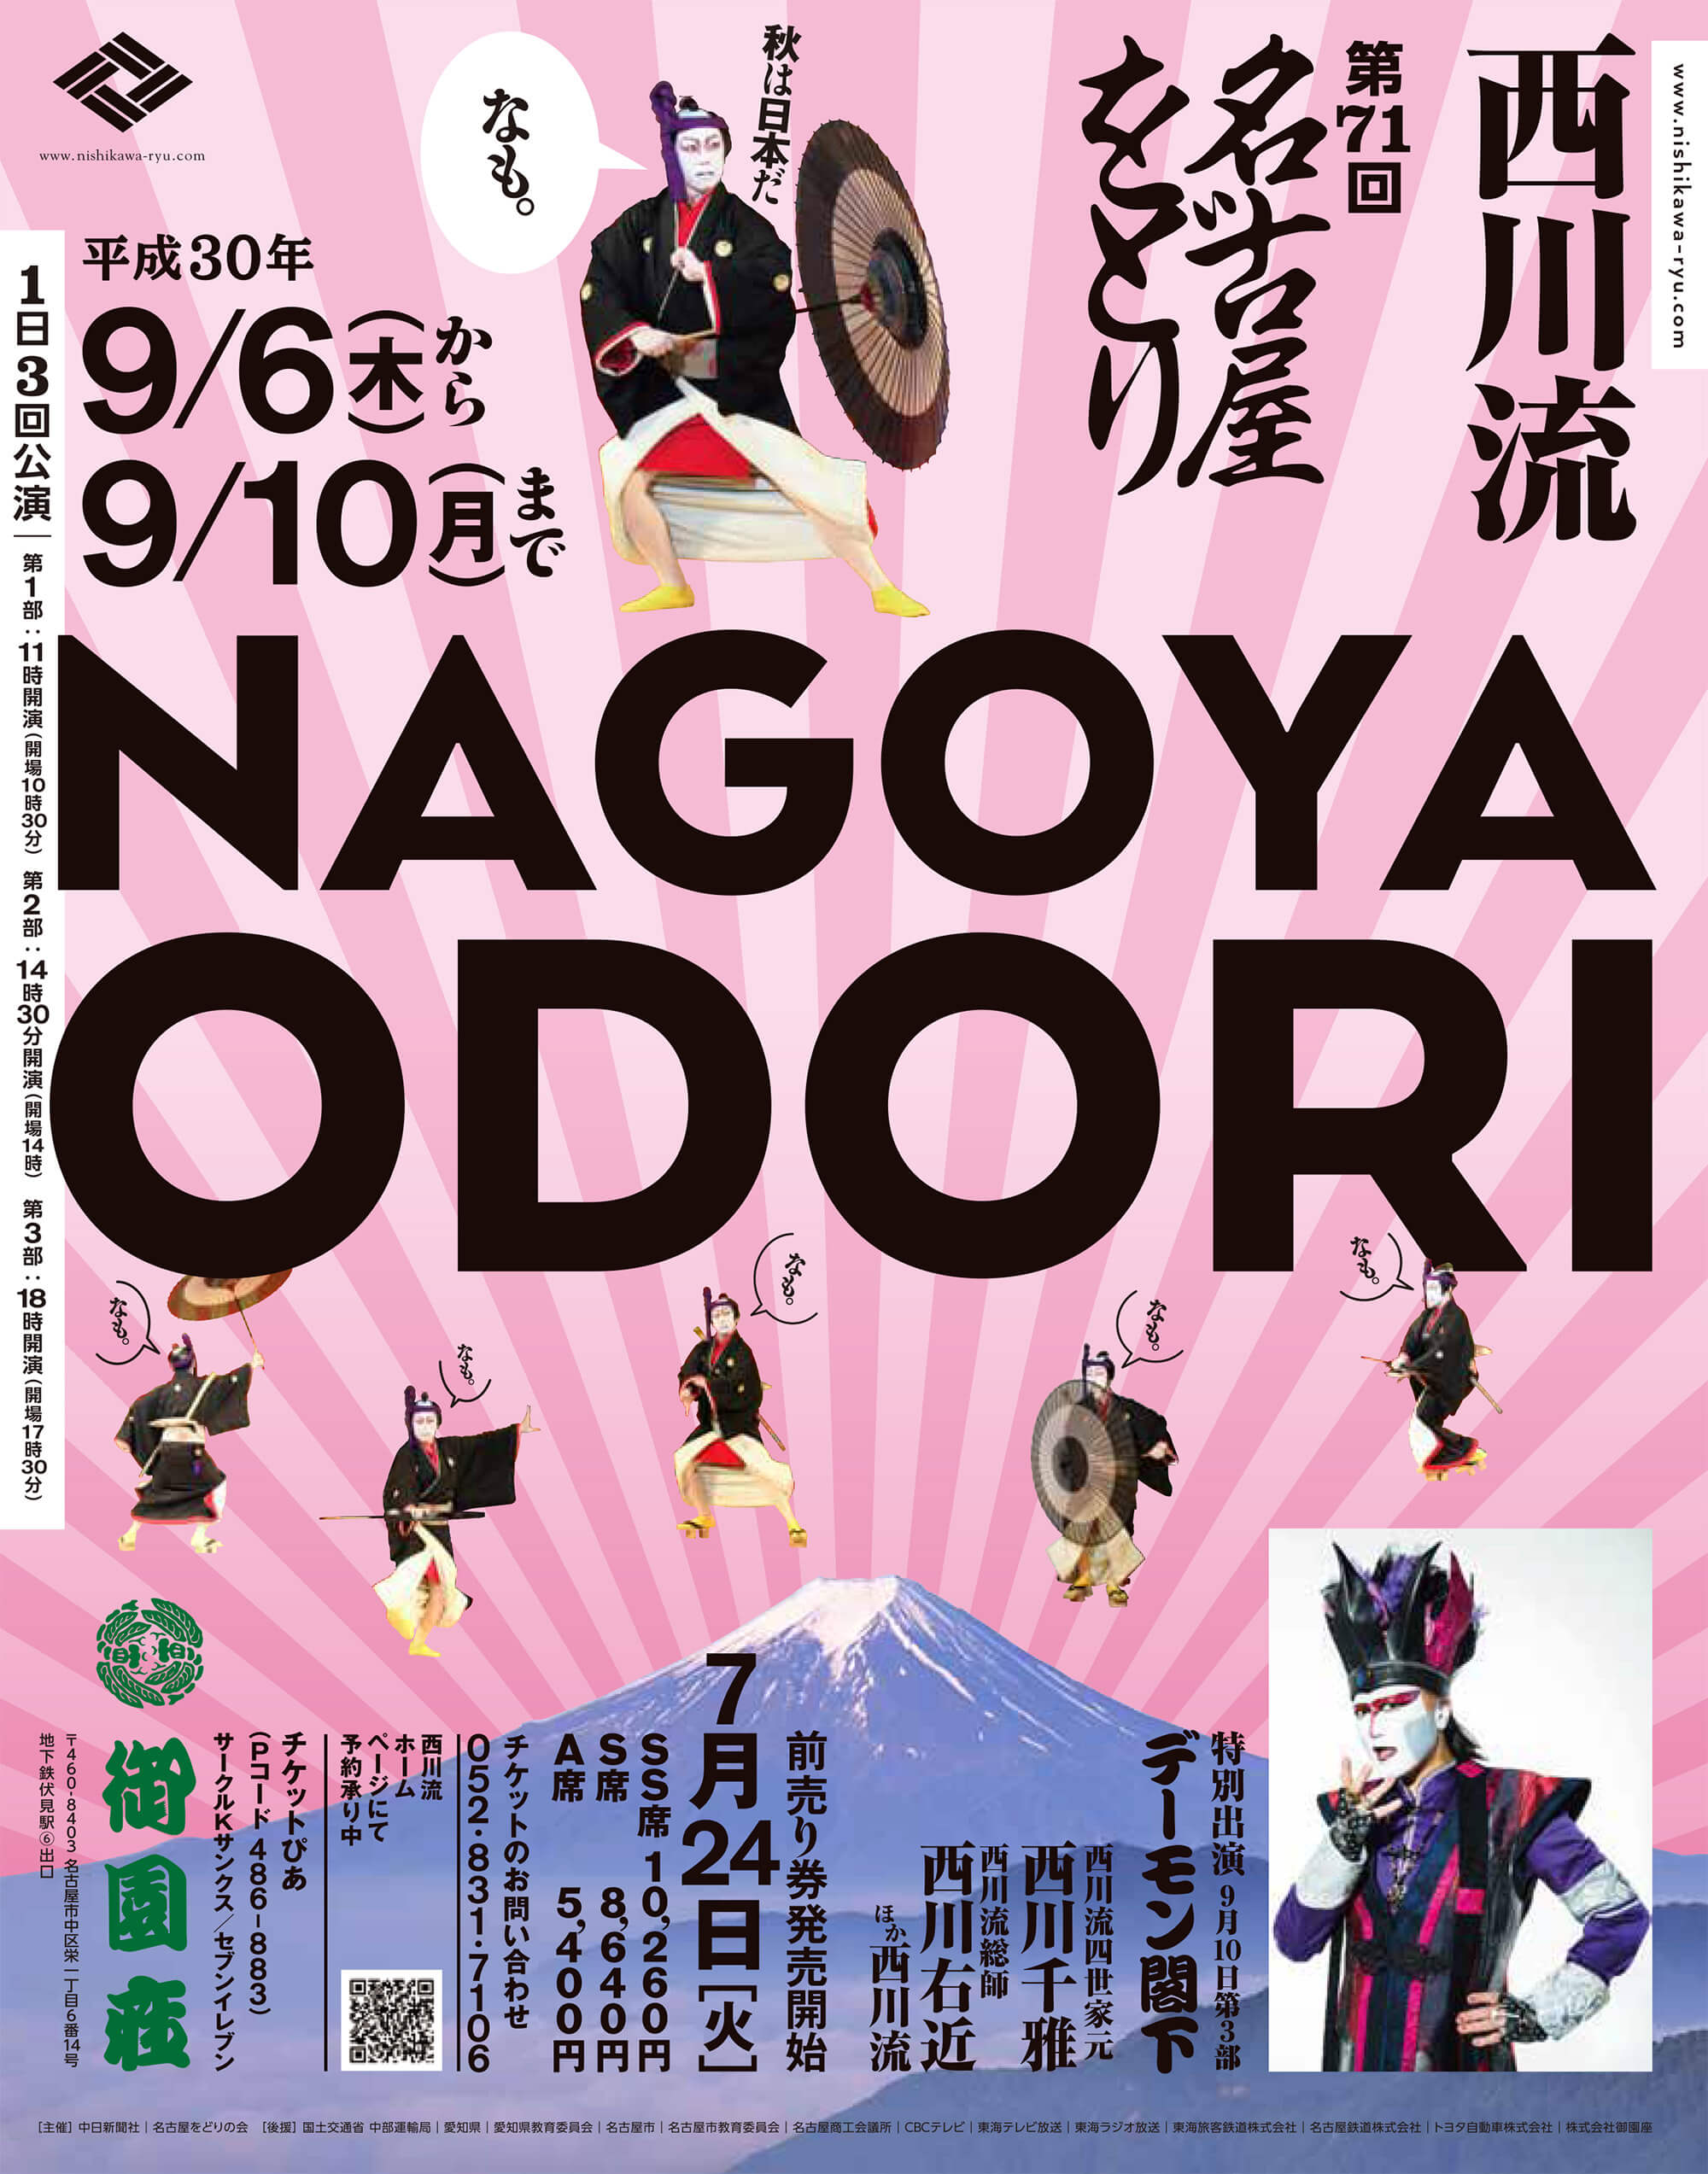 Nagoya Odori 2018 poster